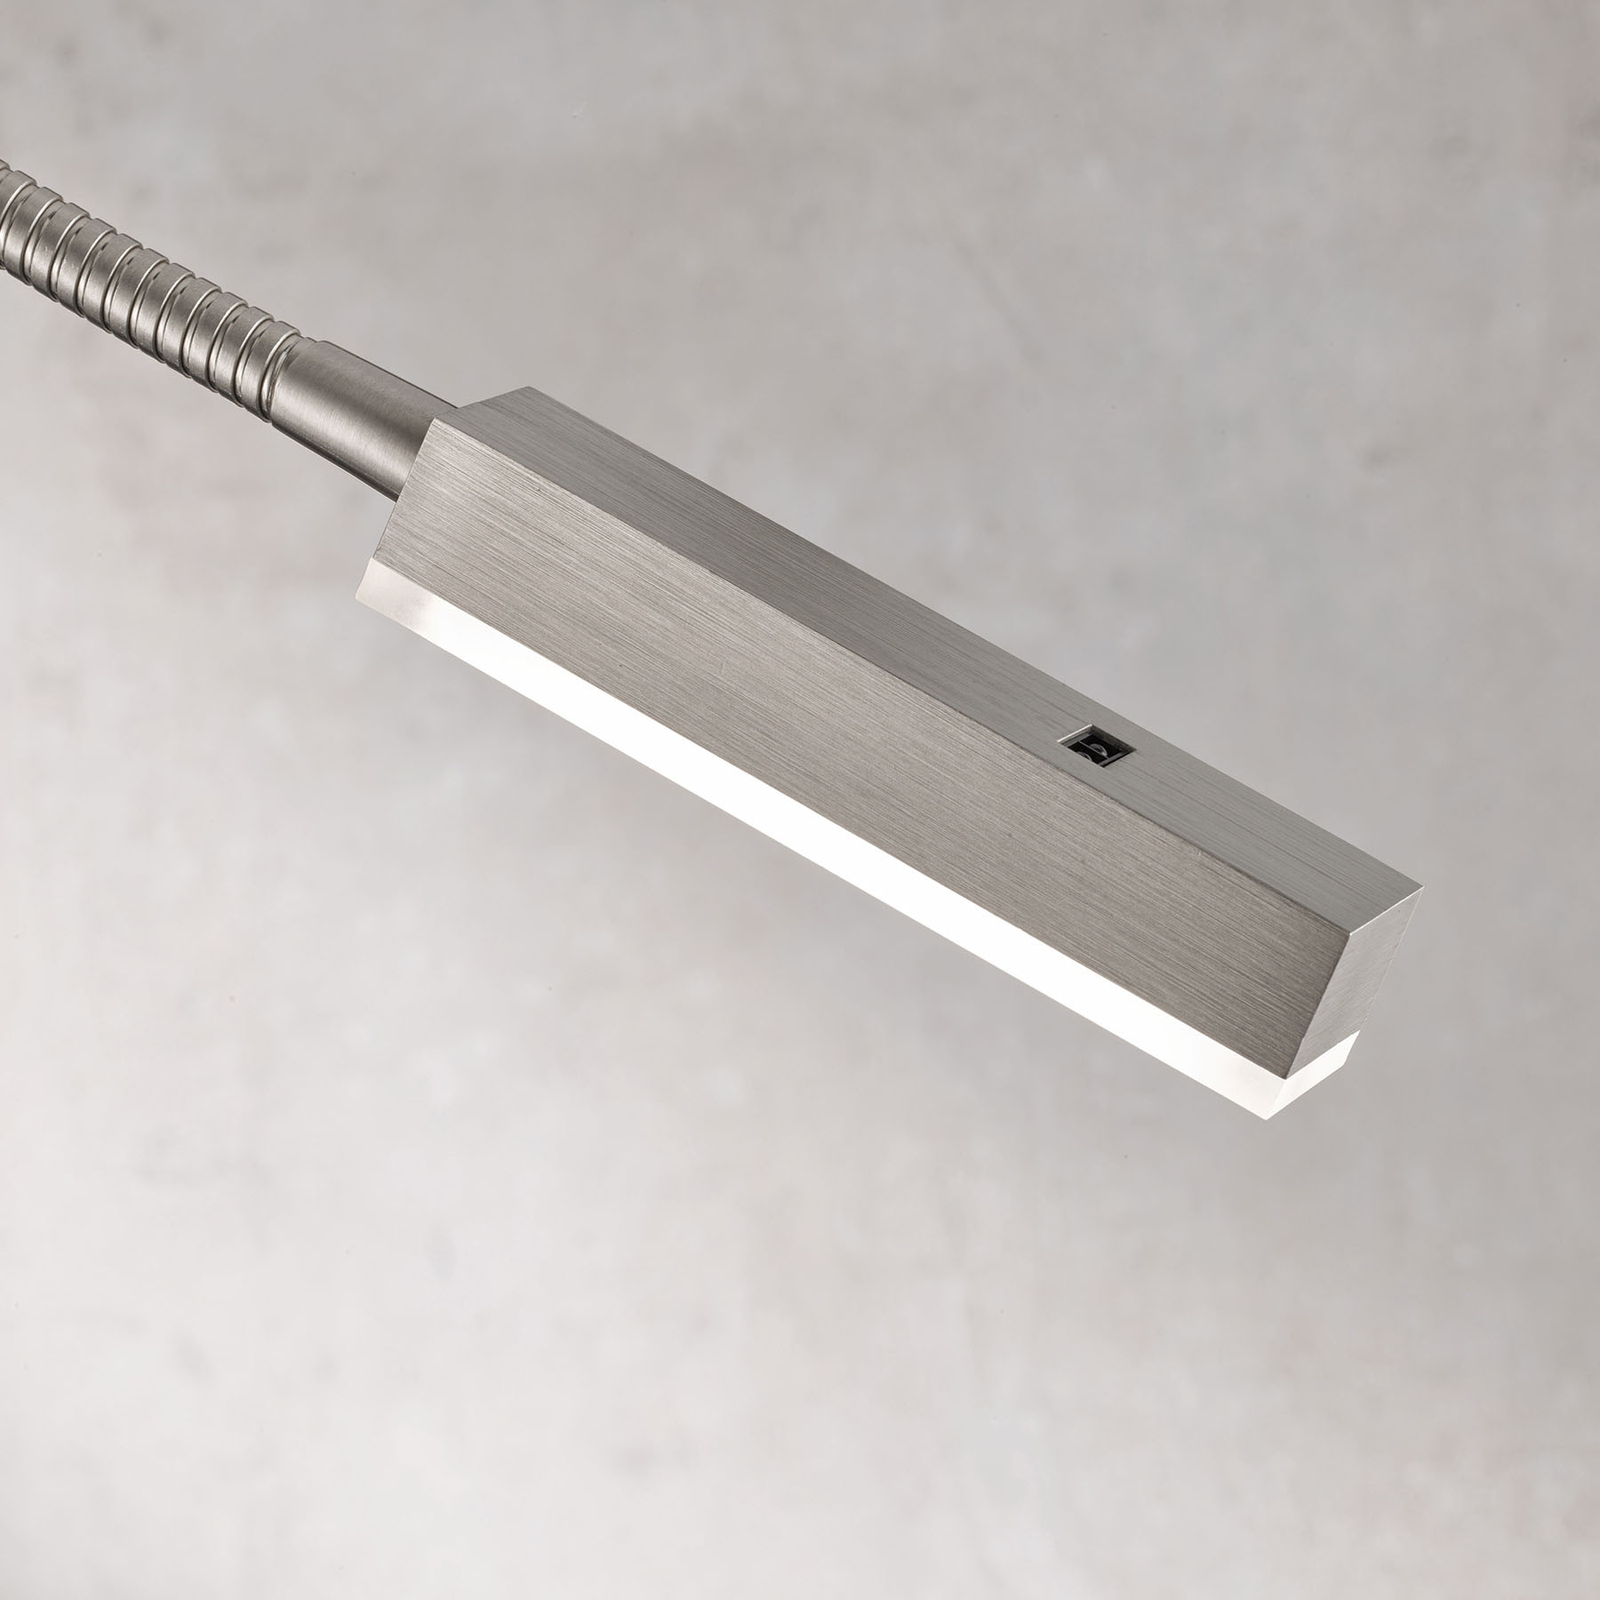 Raik LED clip-on light with gesture control, 60 cm